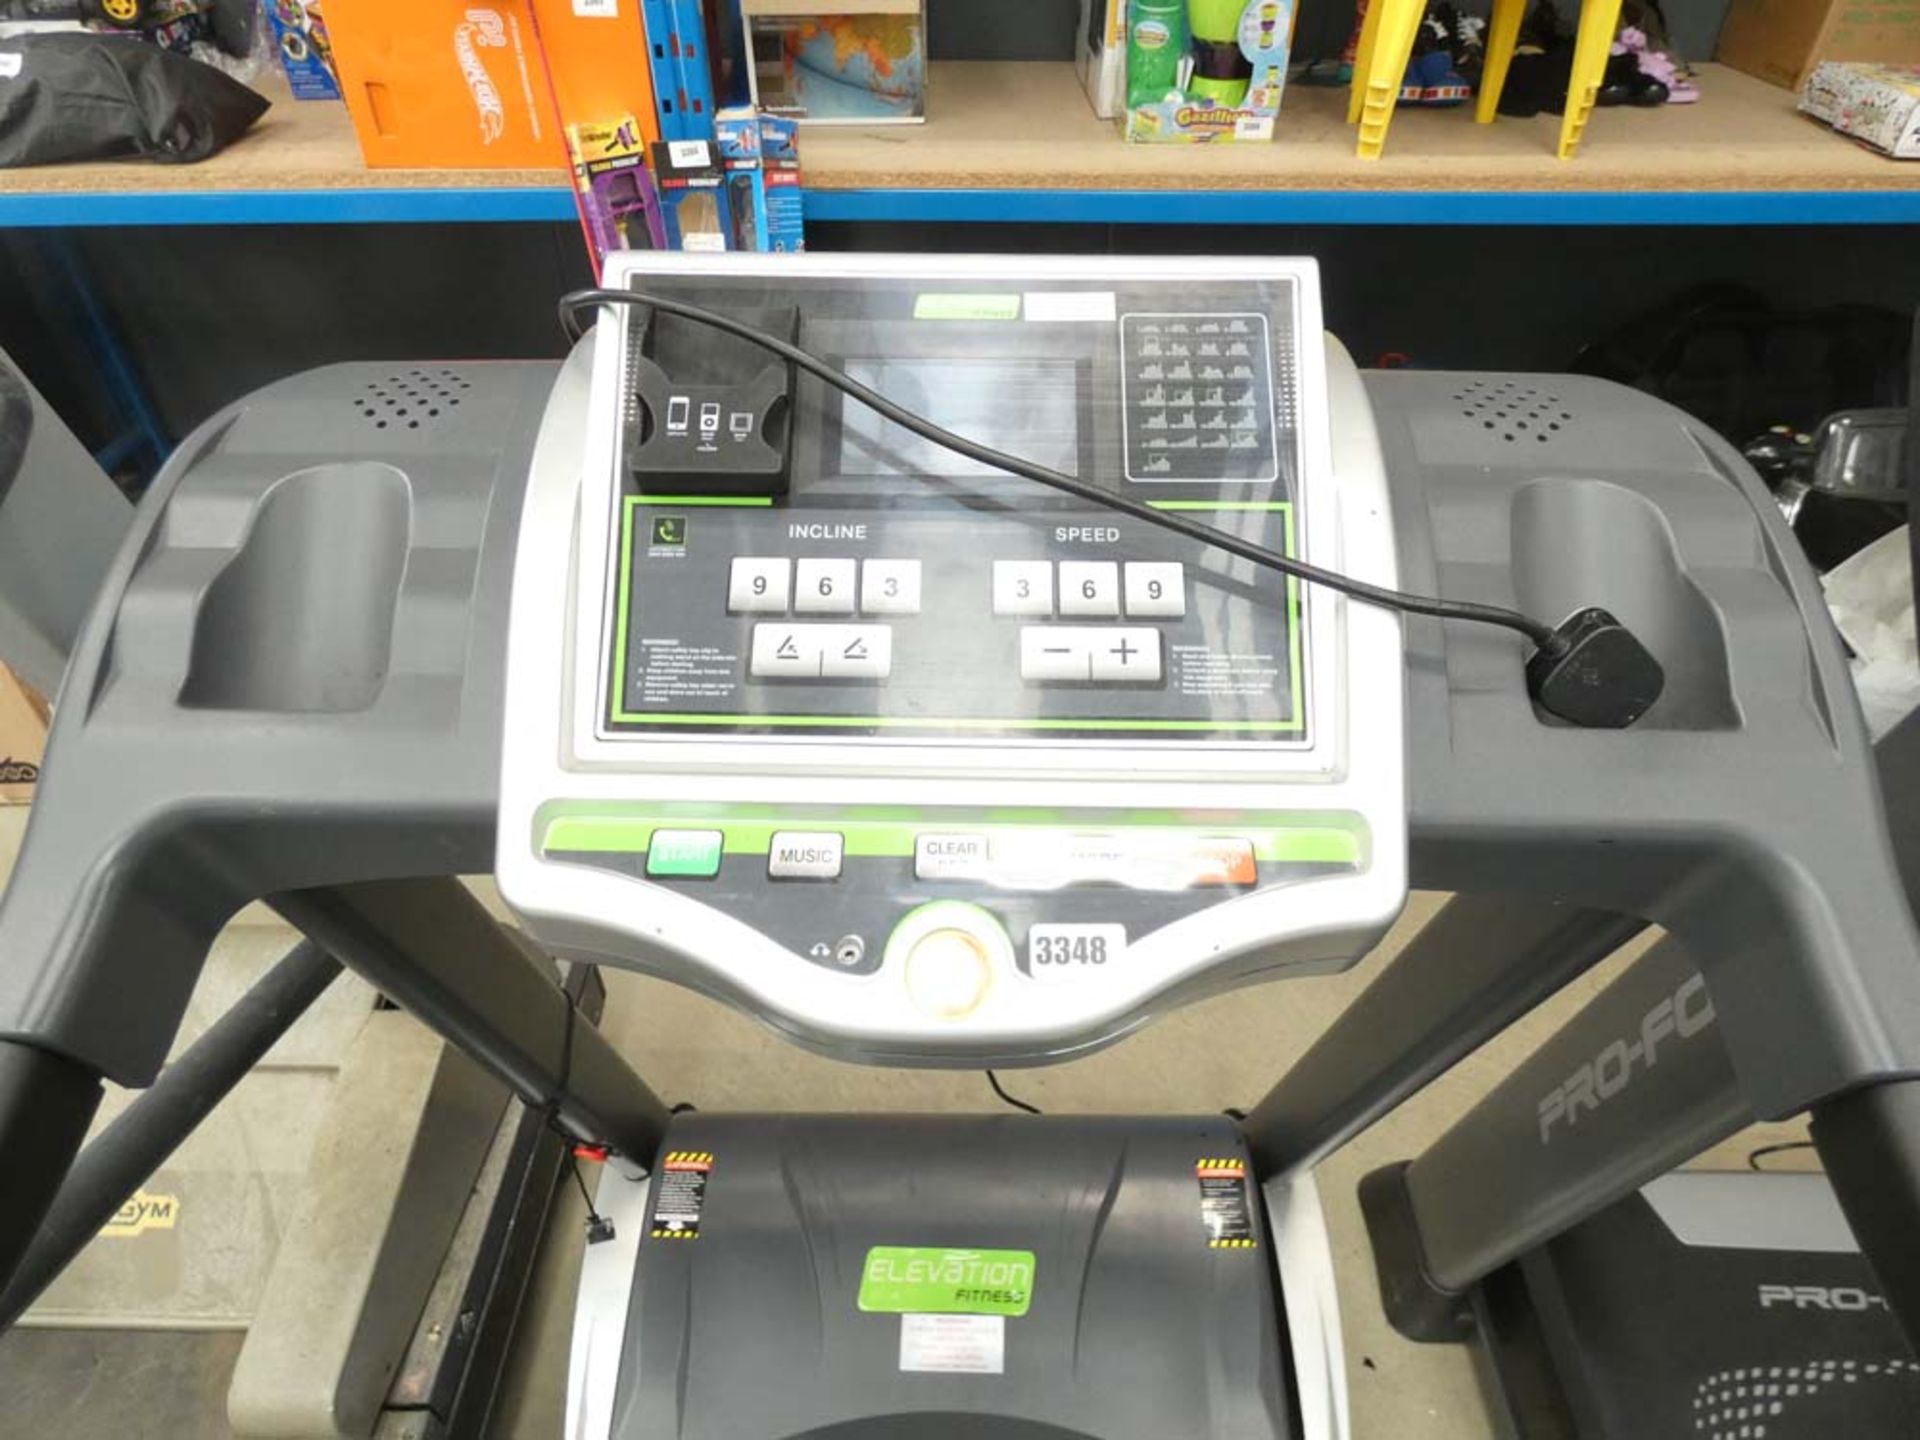 Elevation fitness treadmill - Image 2 of 2